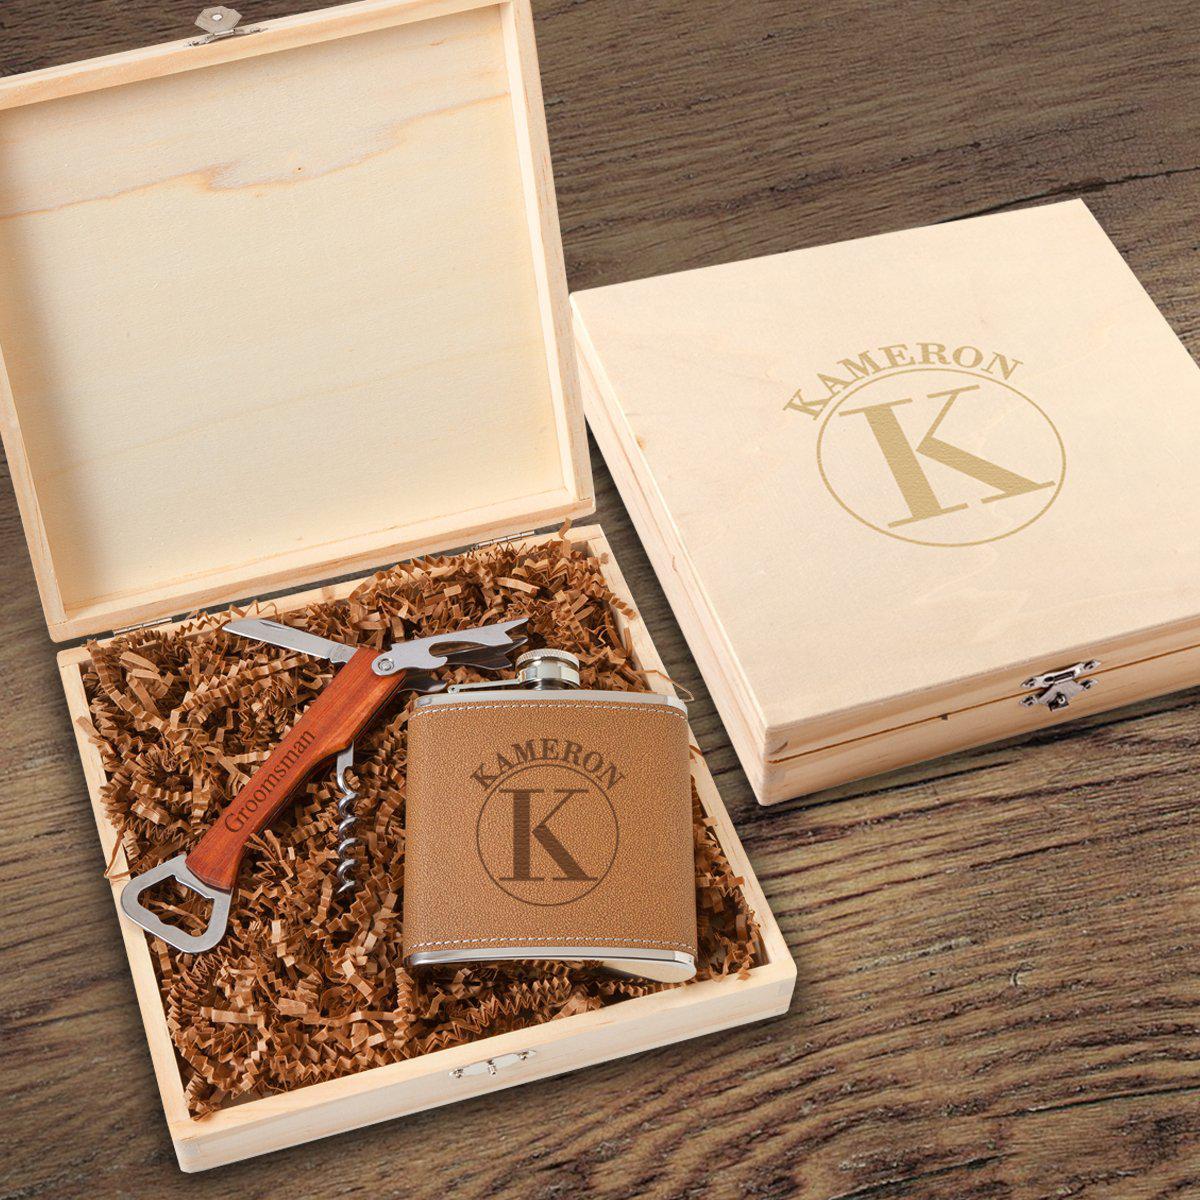 Personalized Kelso Groomsmen Flask Gift Box Set